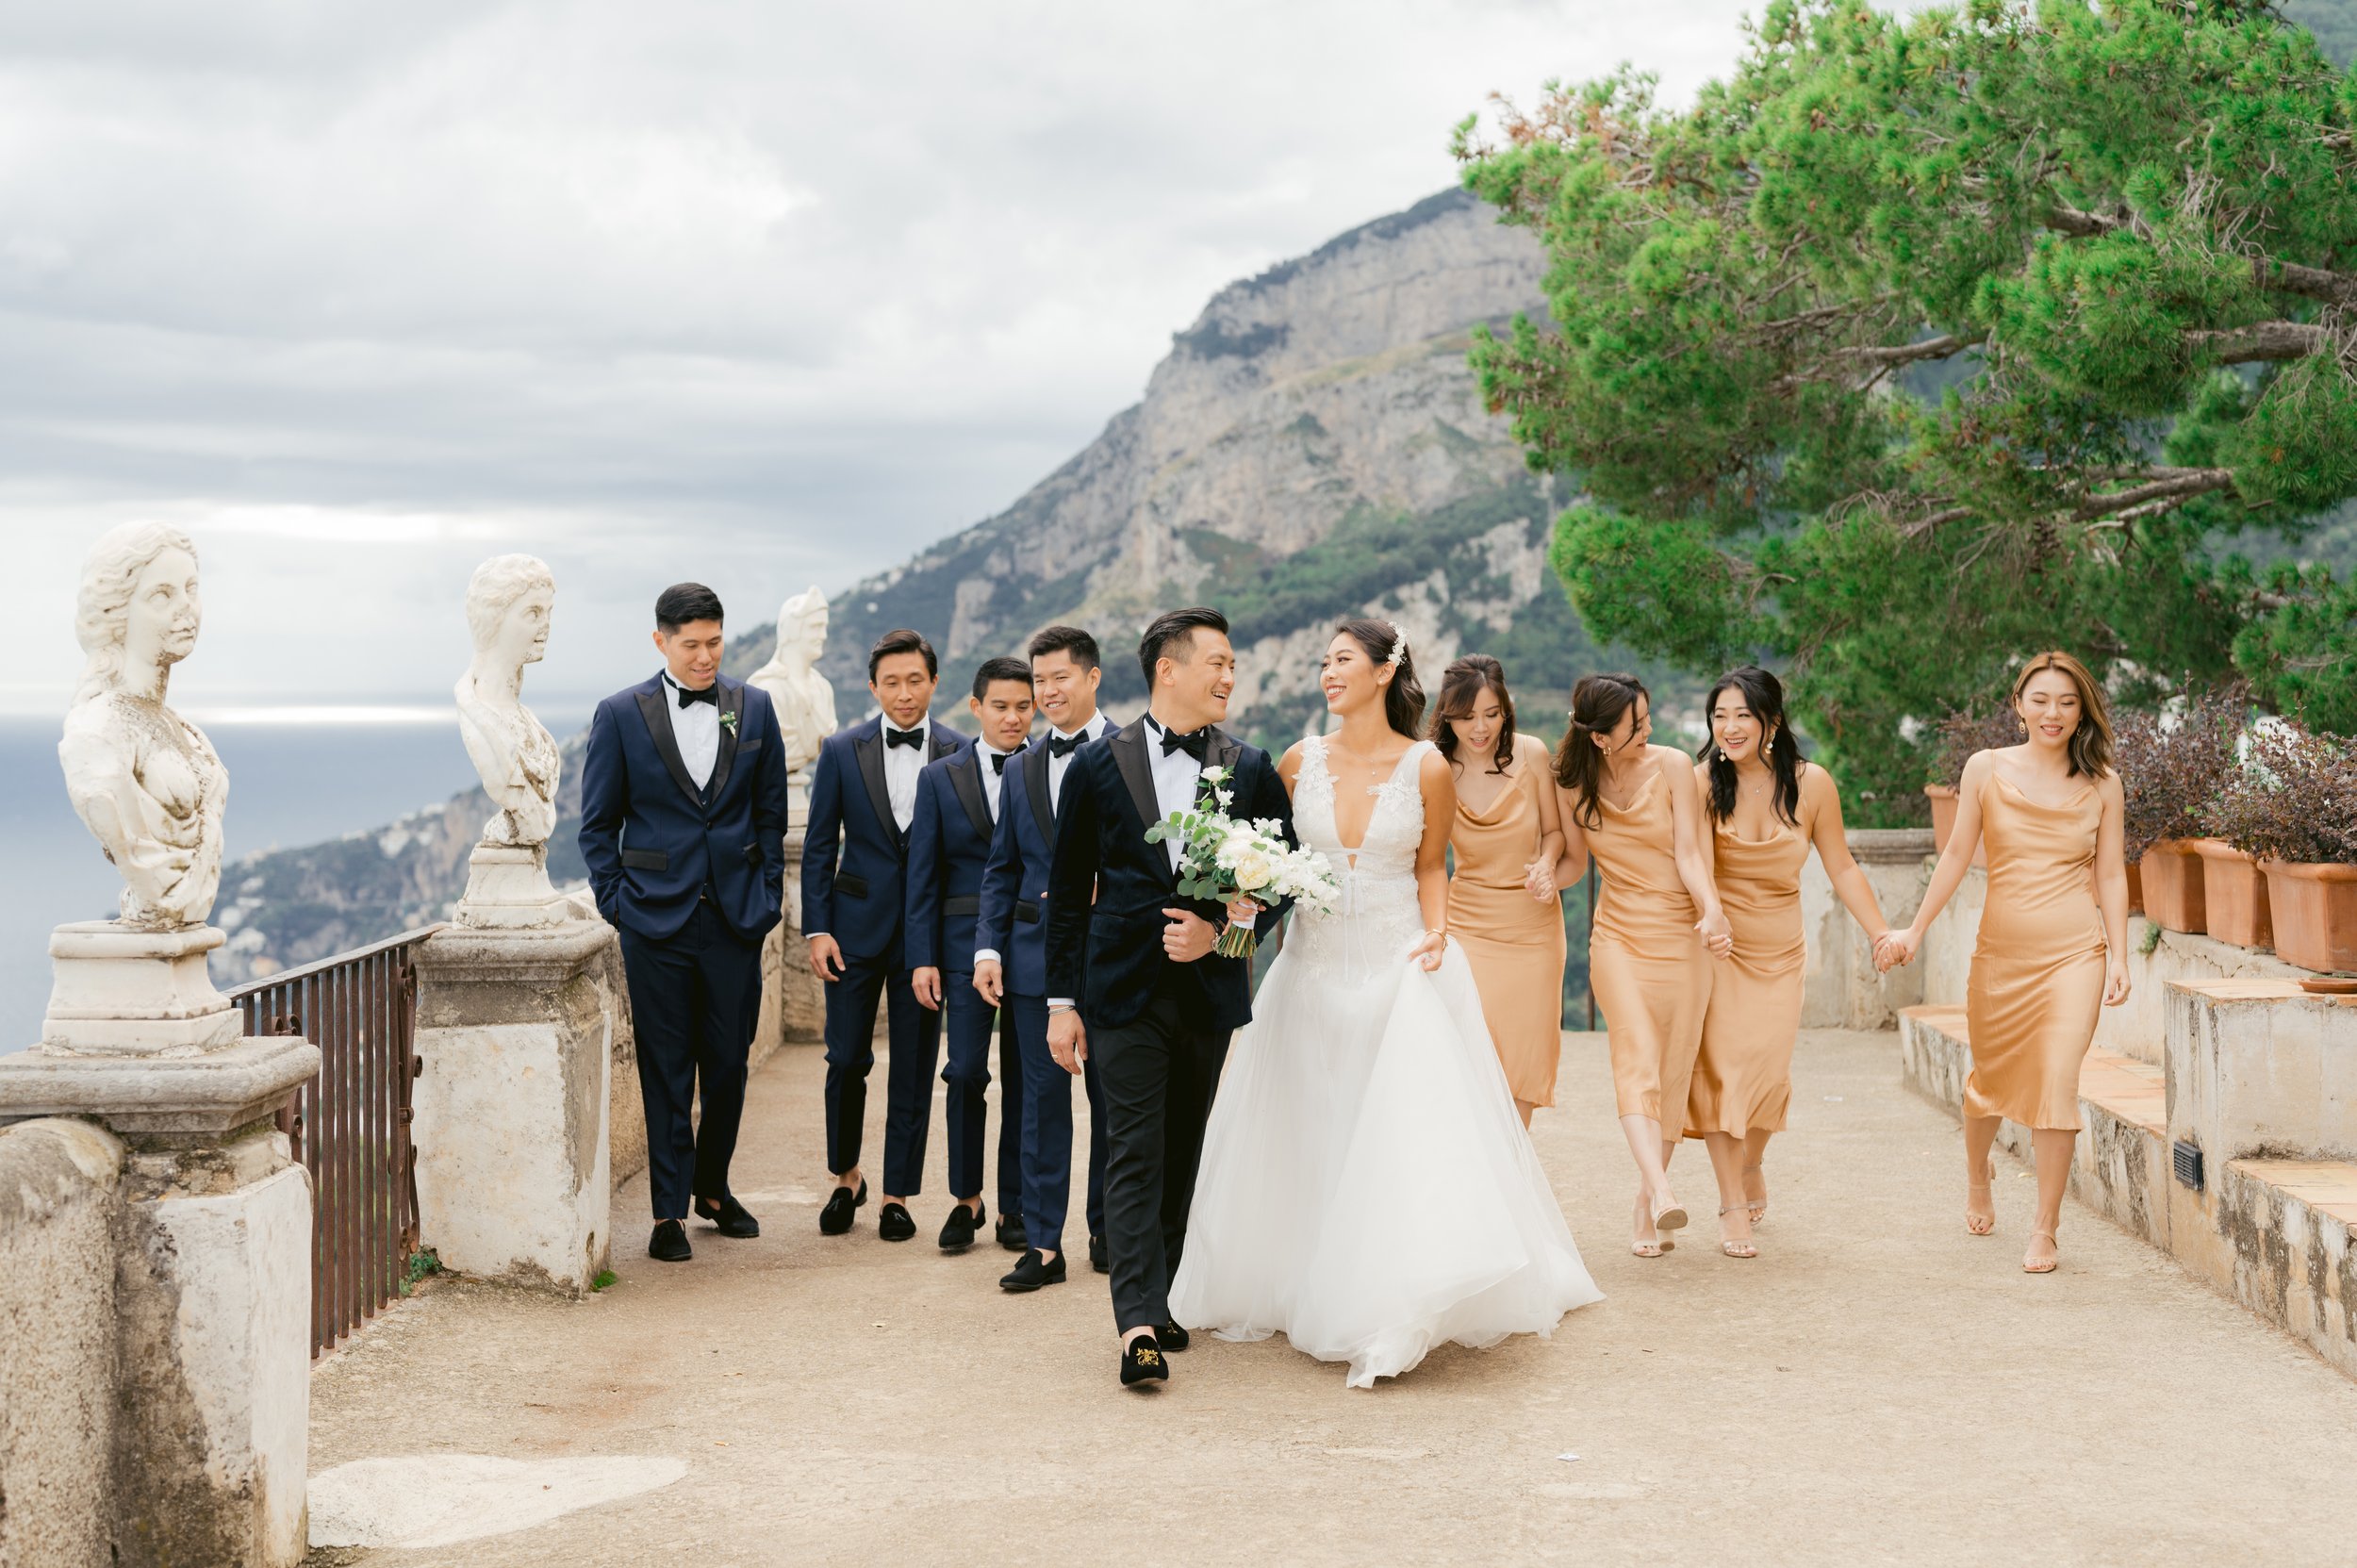 villa-cimbrone-wedding-italy-ravellow-events-by-paulina-5.jpg